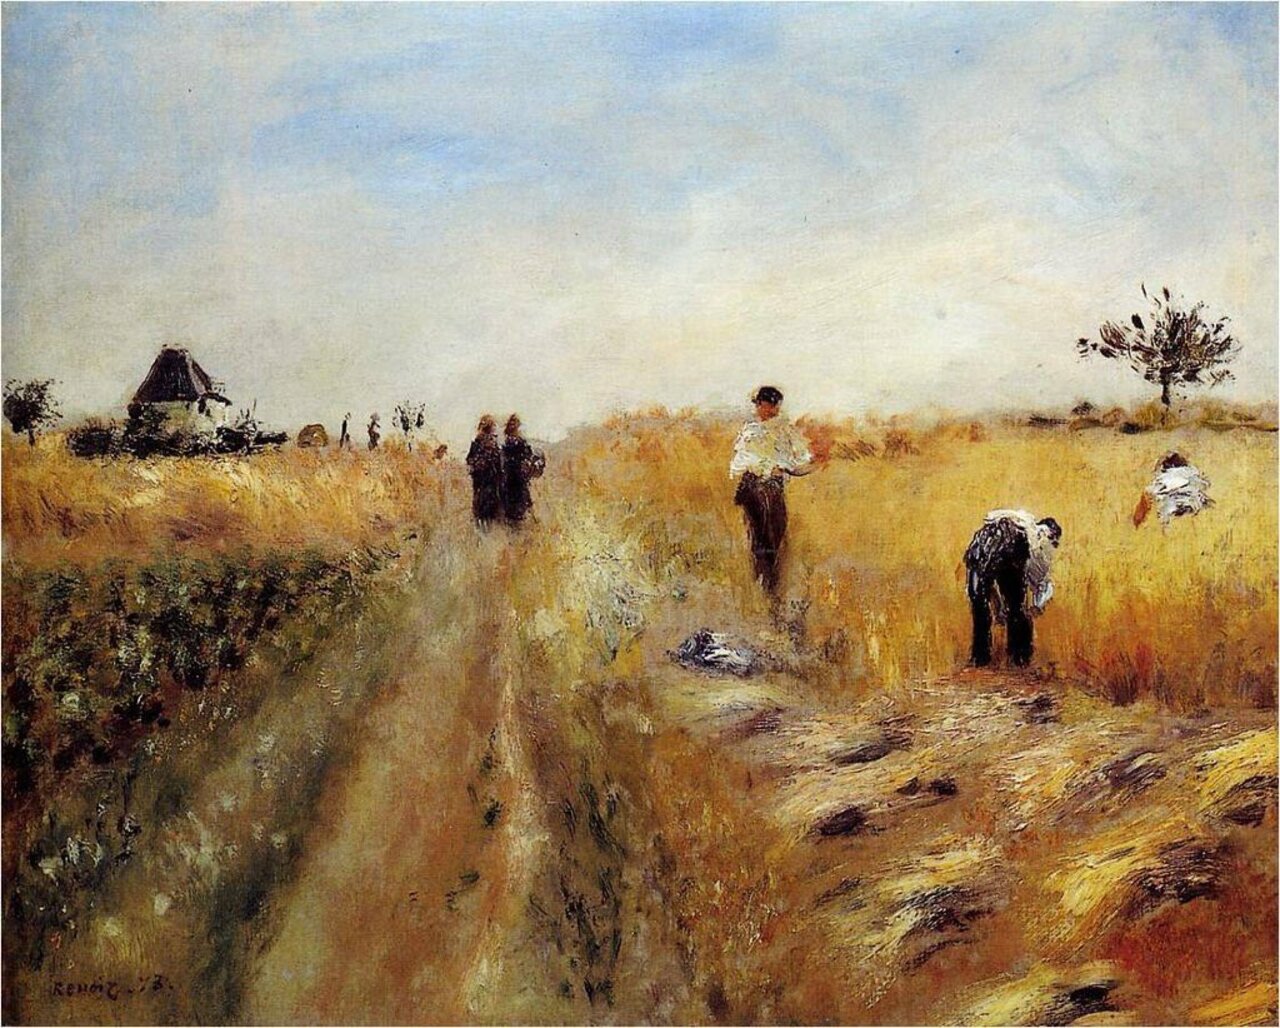 Pierre-Auguste #RENOIR, "THE HARVESTERS" 1873 #art #artwit #twitart #iloveart #artist #painting https://t.co/Oi5NsciJ3v